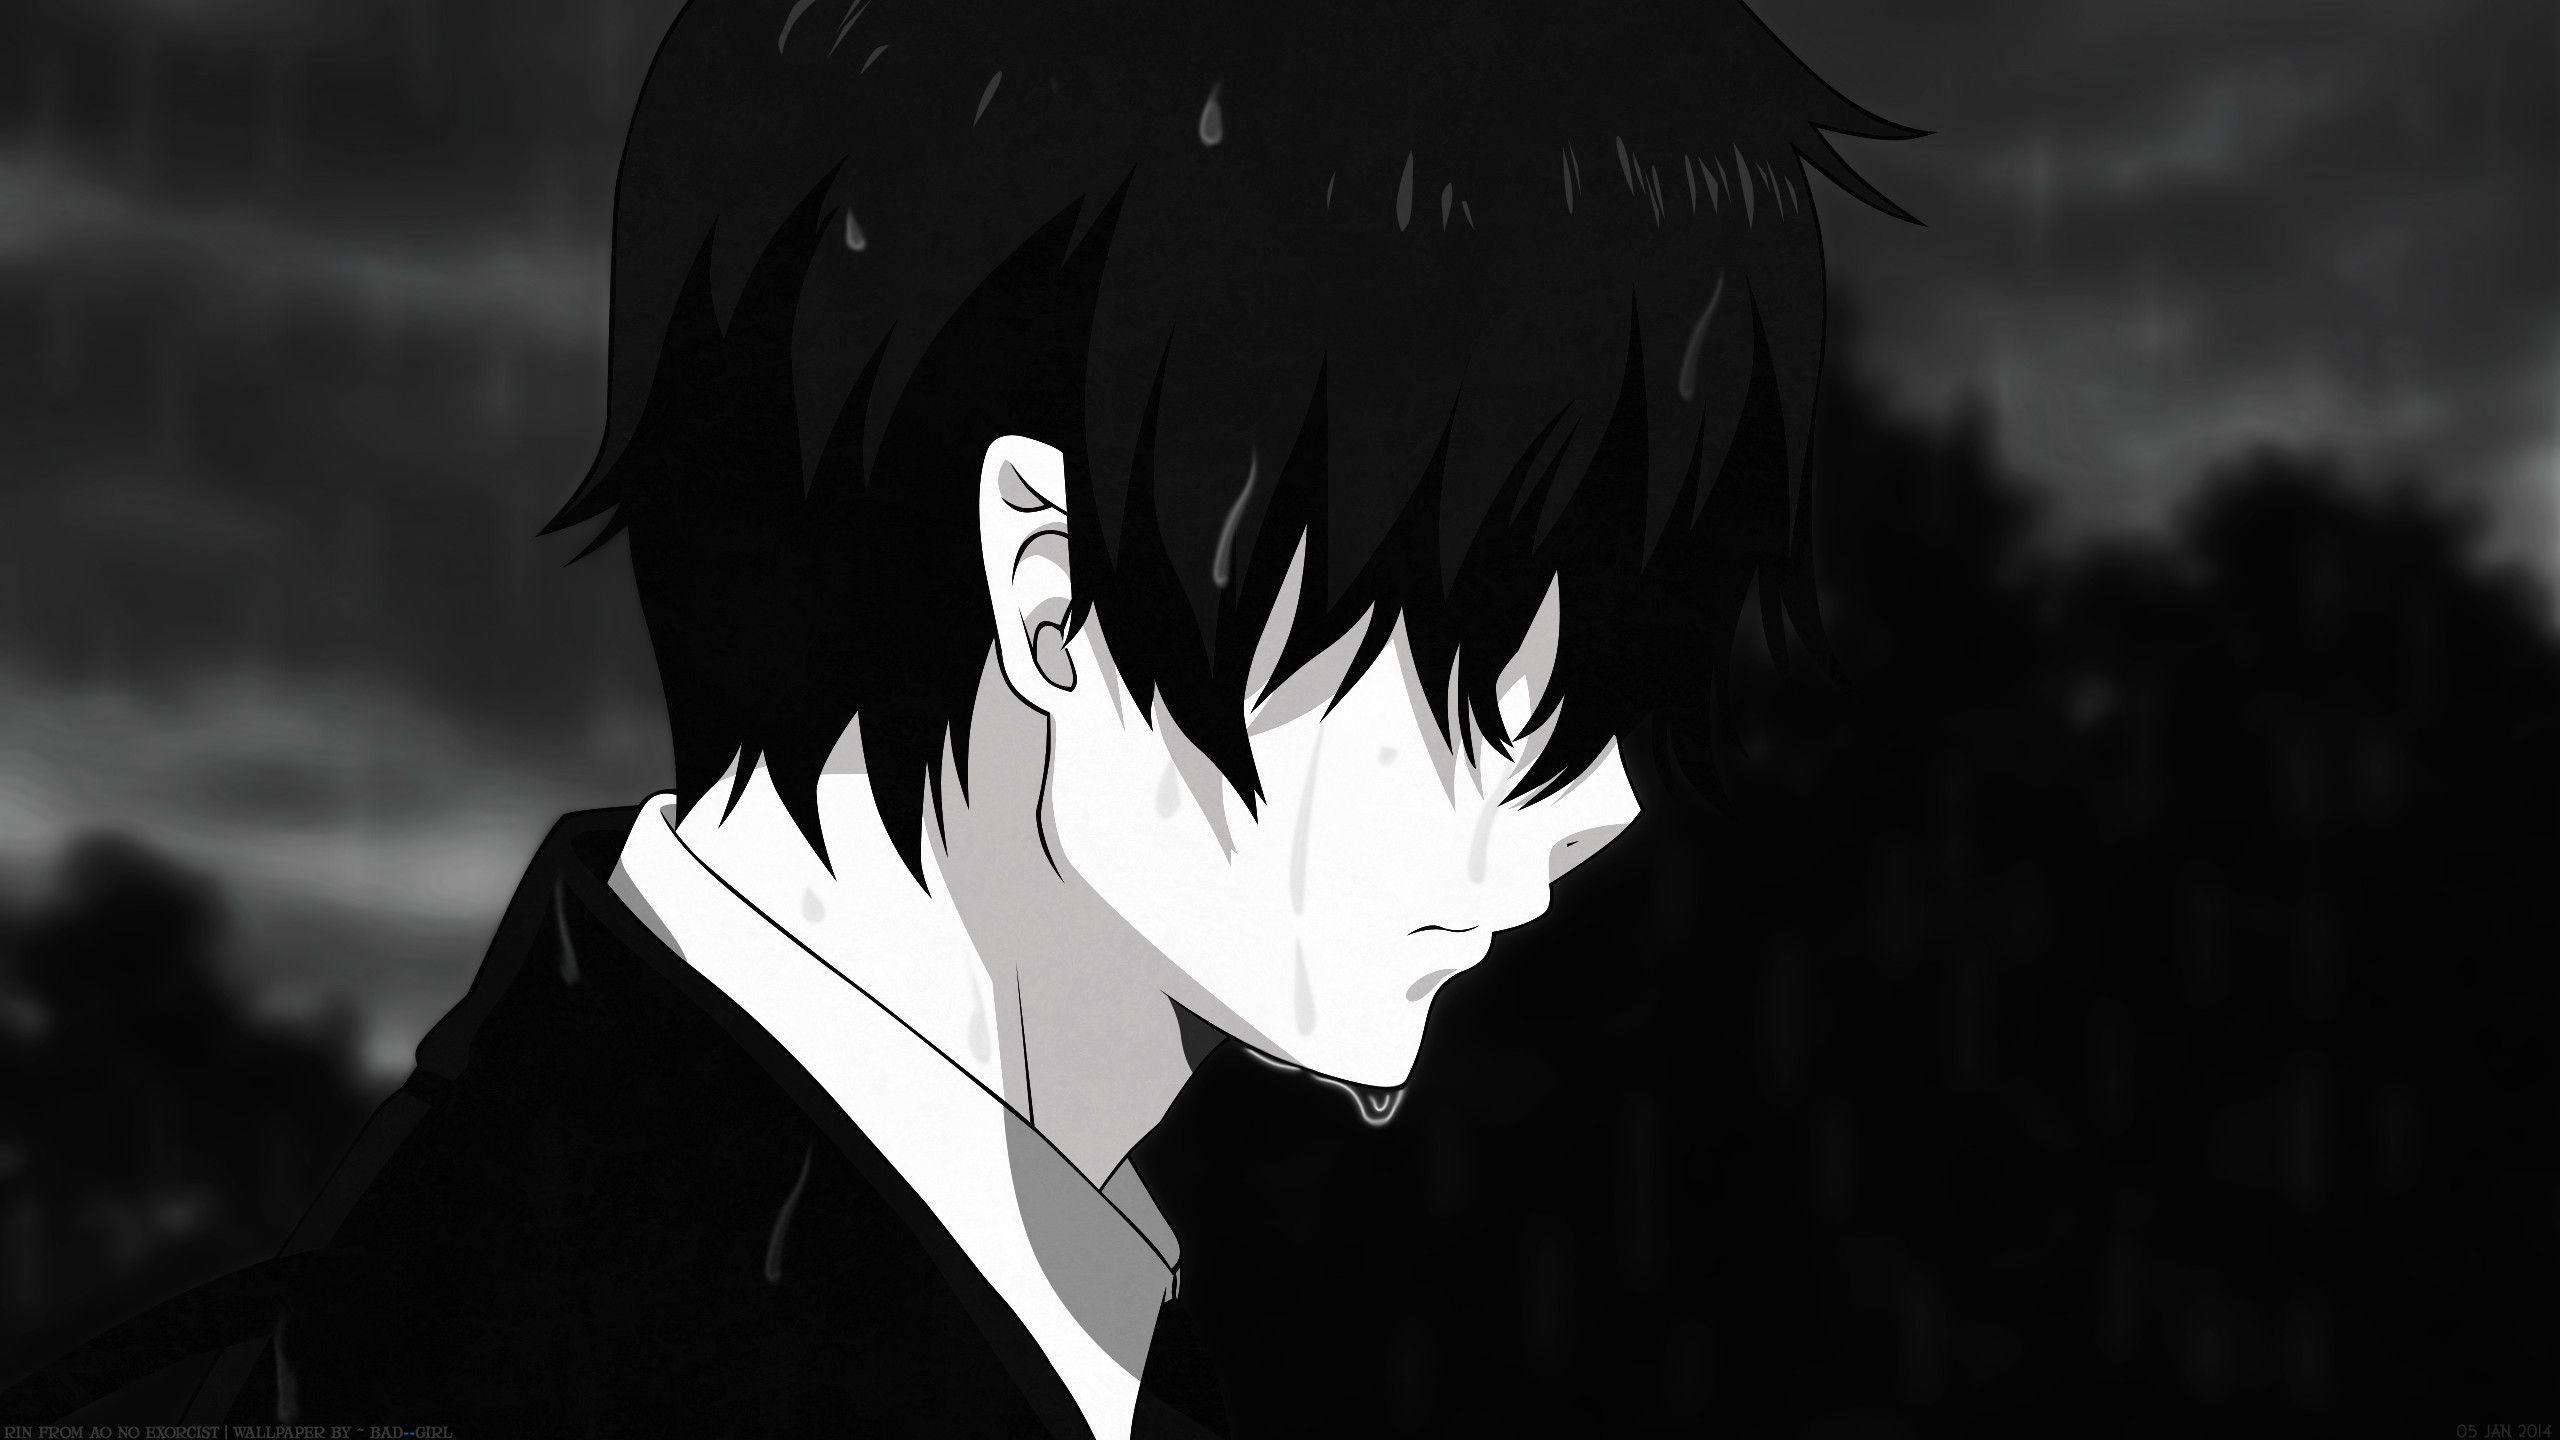 Sad Anime Boy Wallpapers Top Free Sad Anime Boy Backgrounds